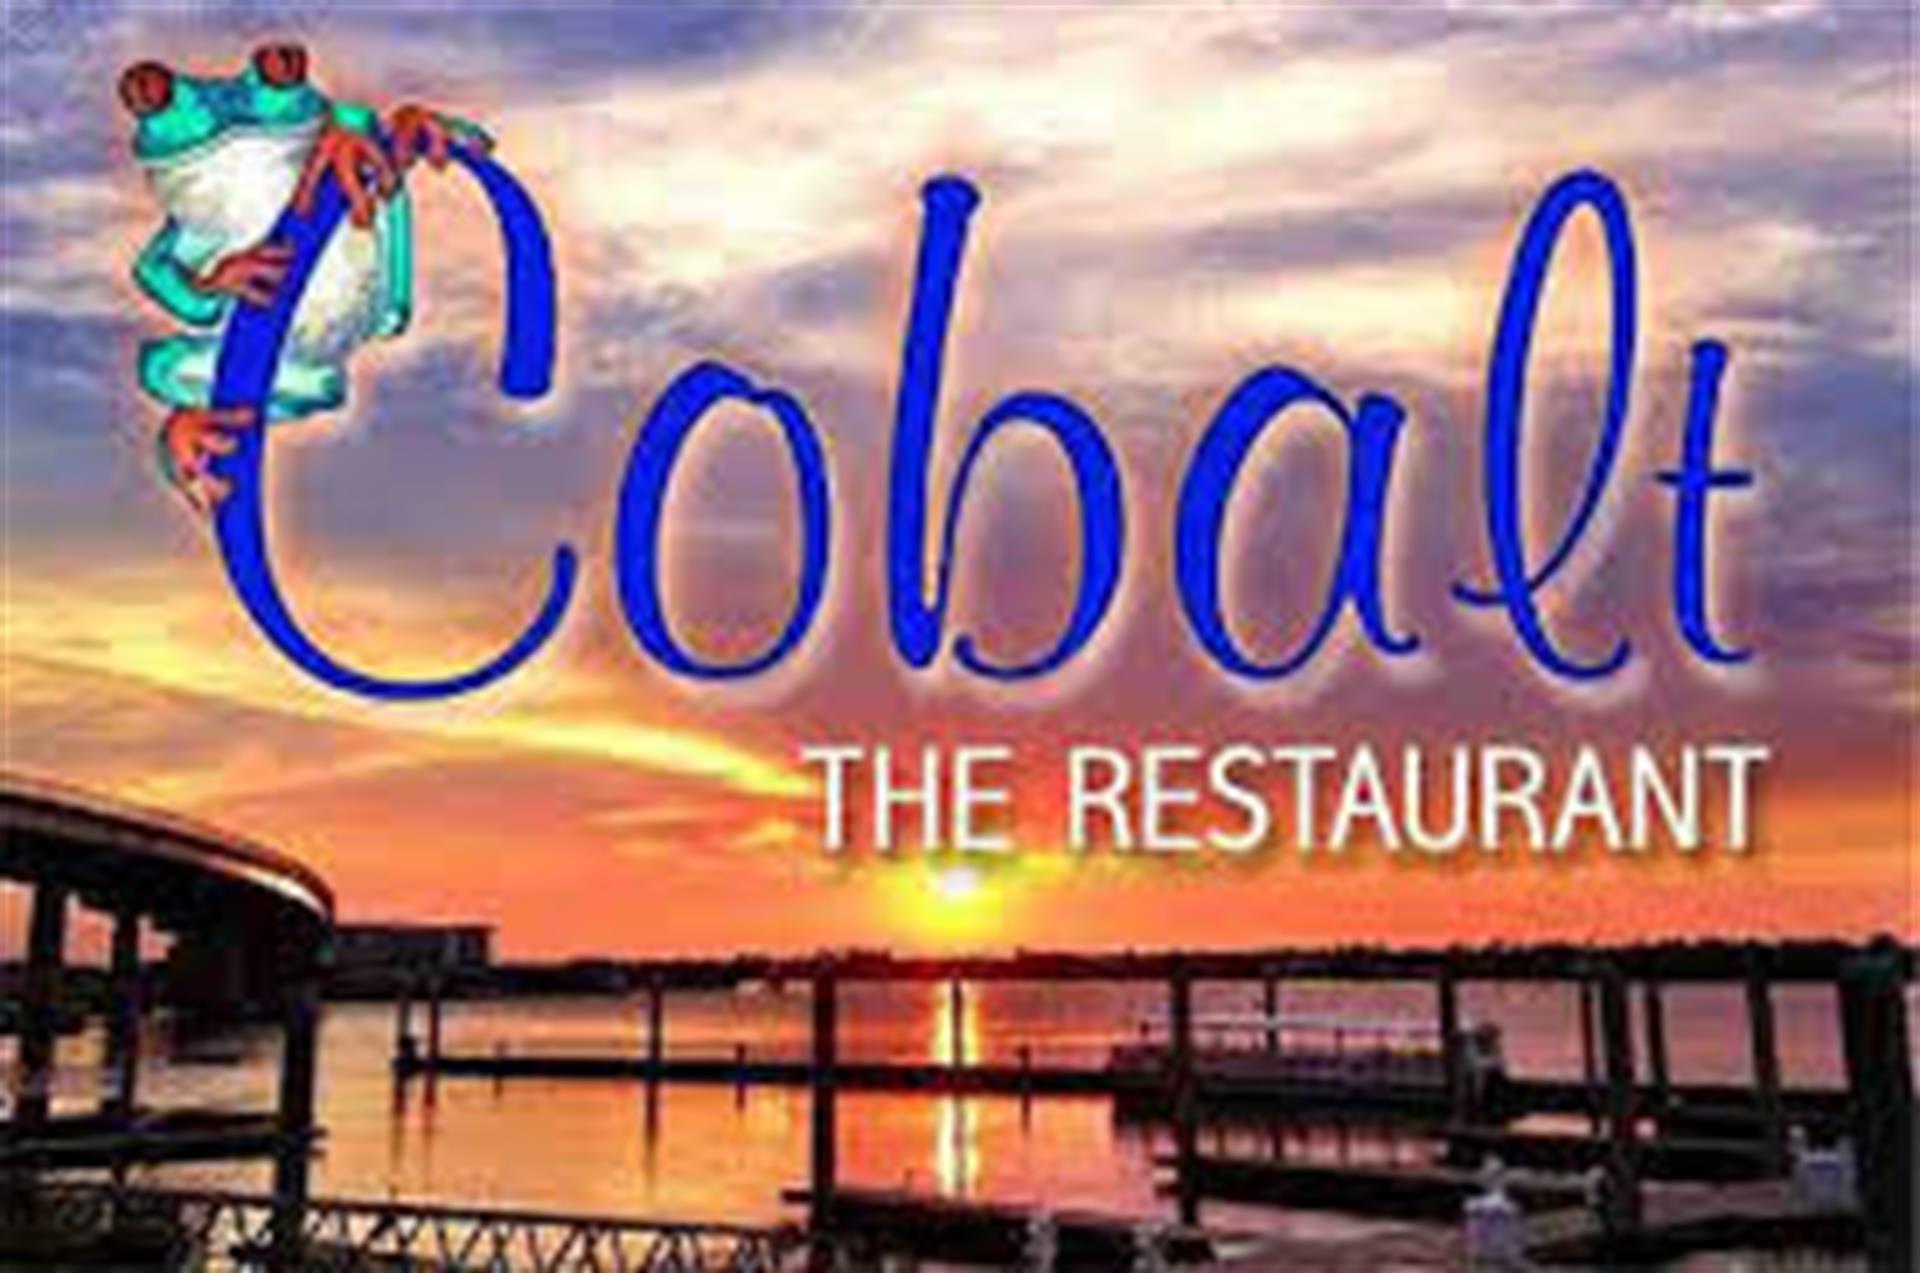 cobalt restaurant menu with prices